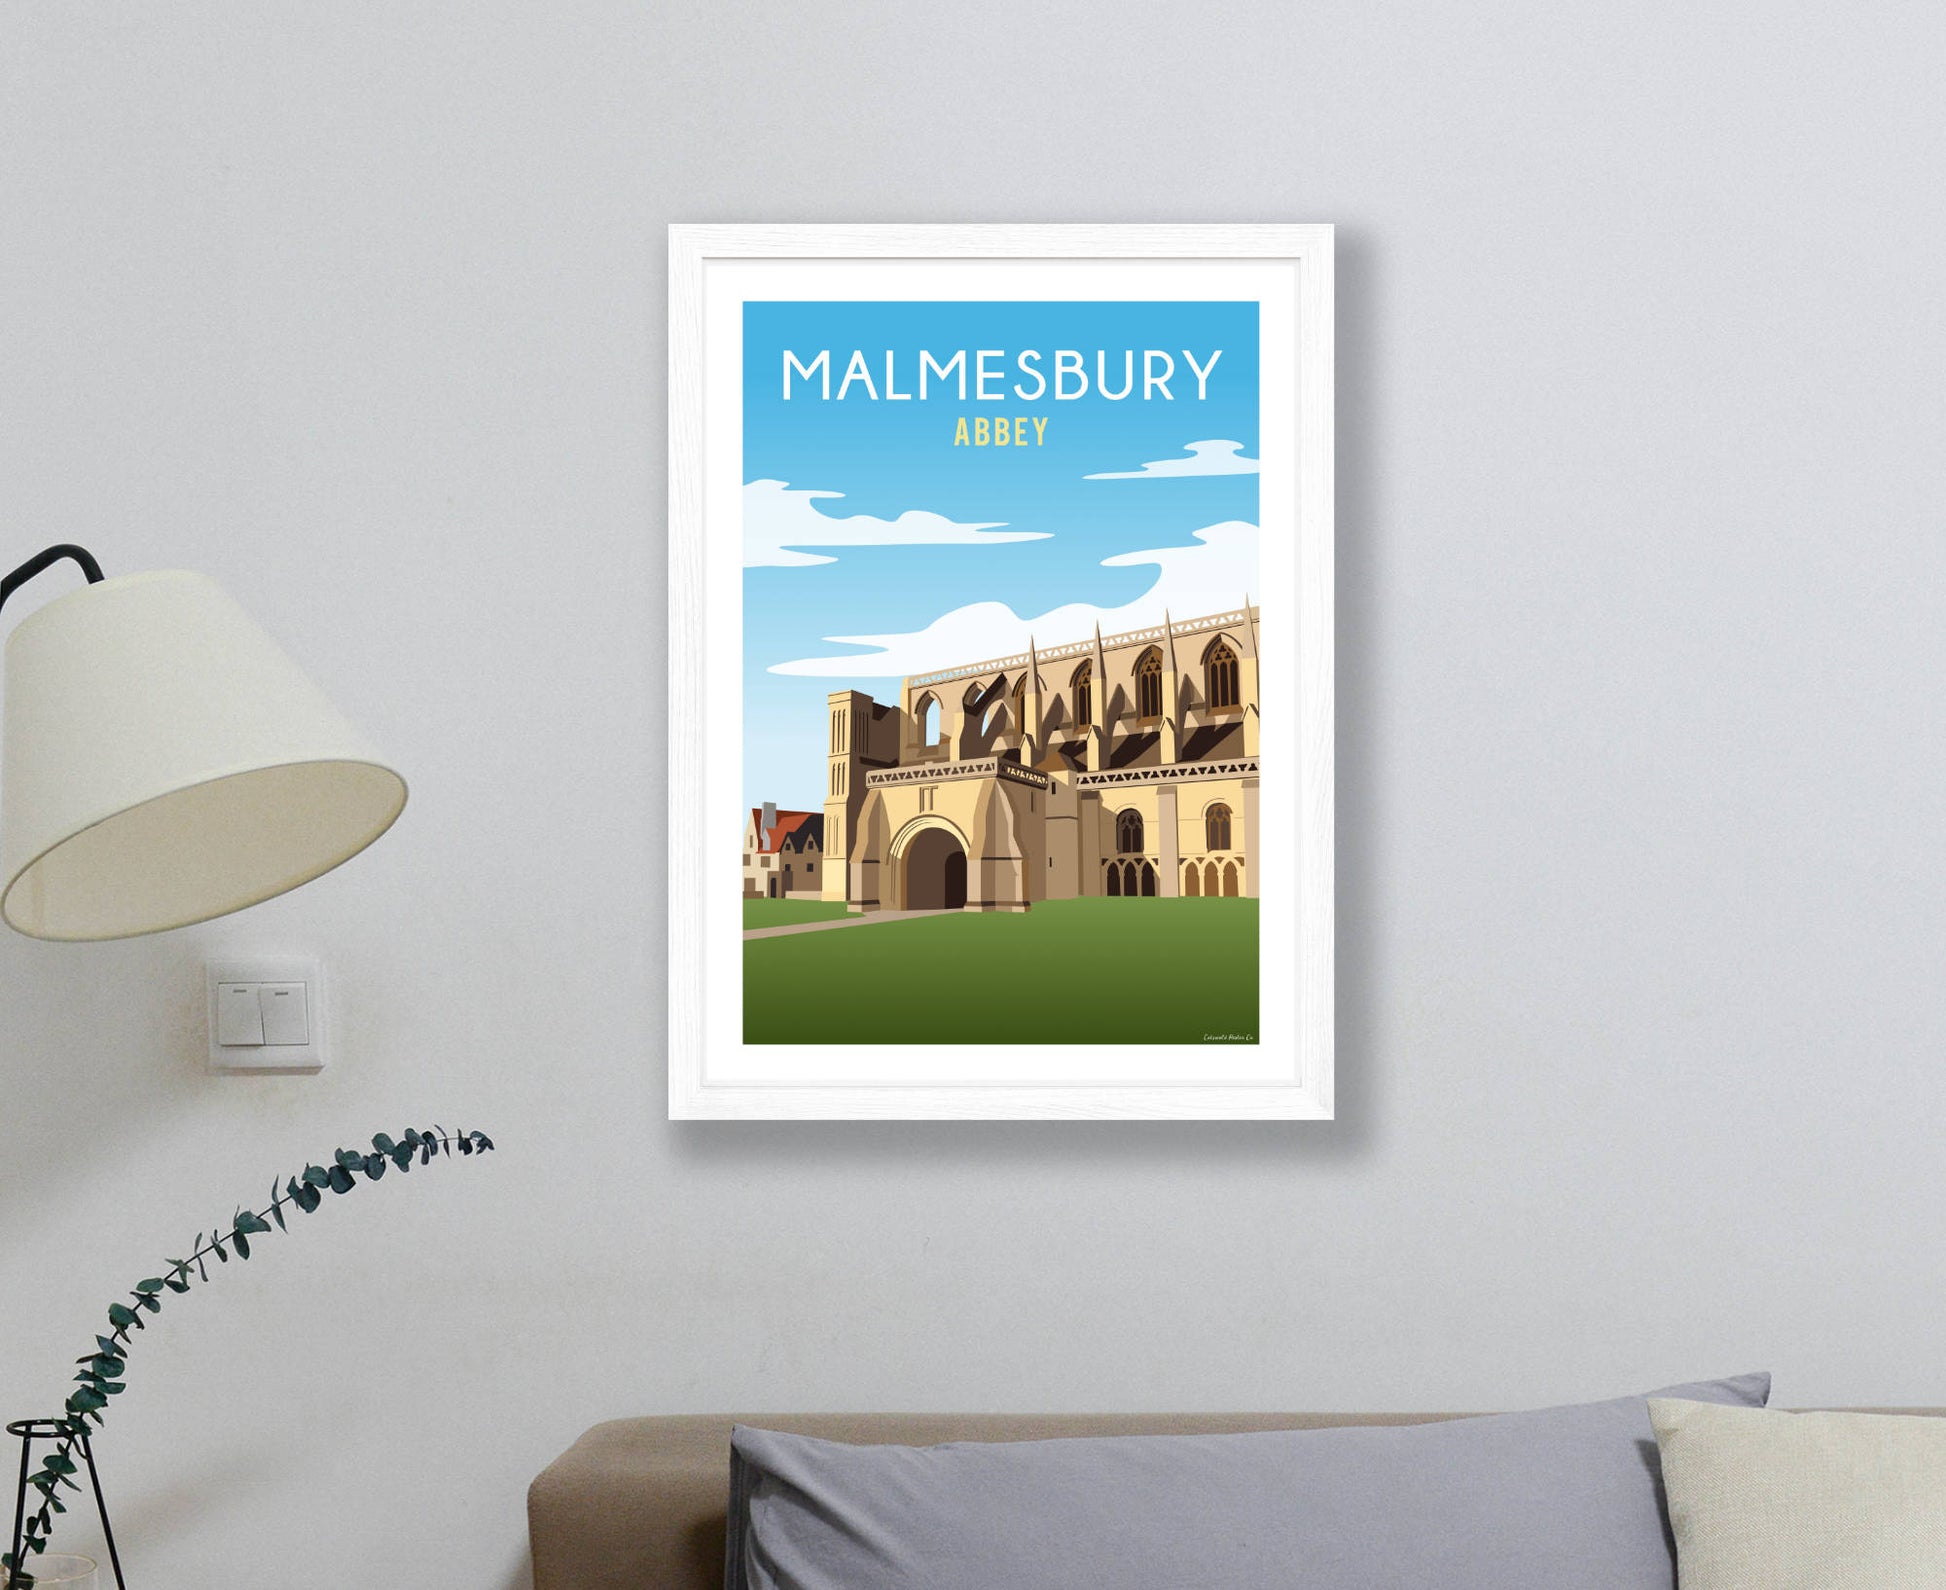 Malmesbury Abbey Poster in white frame